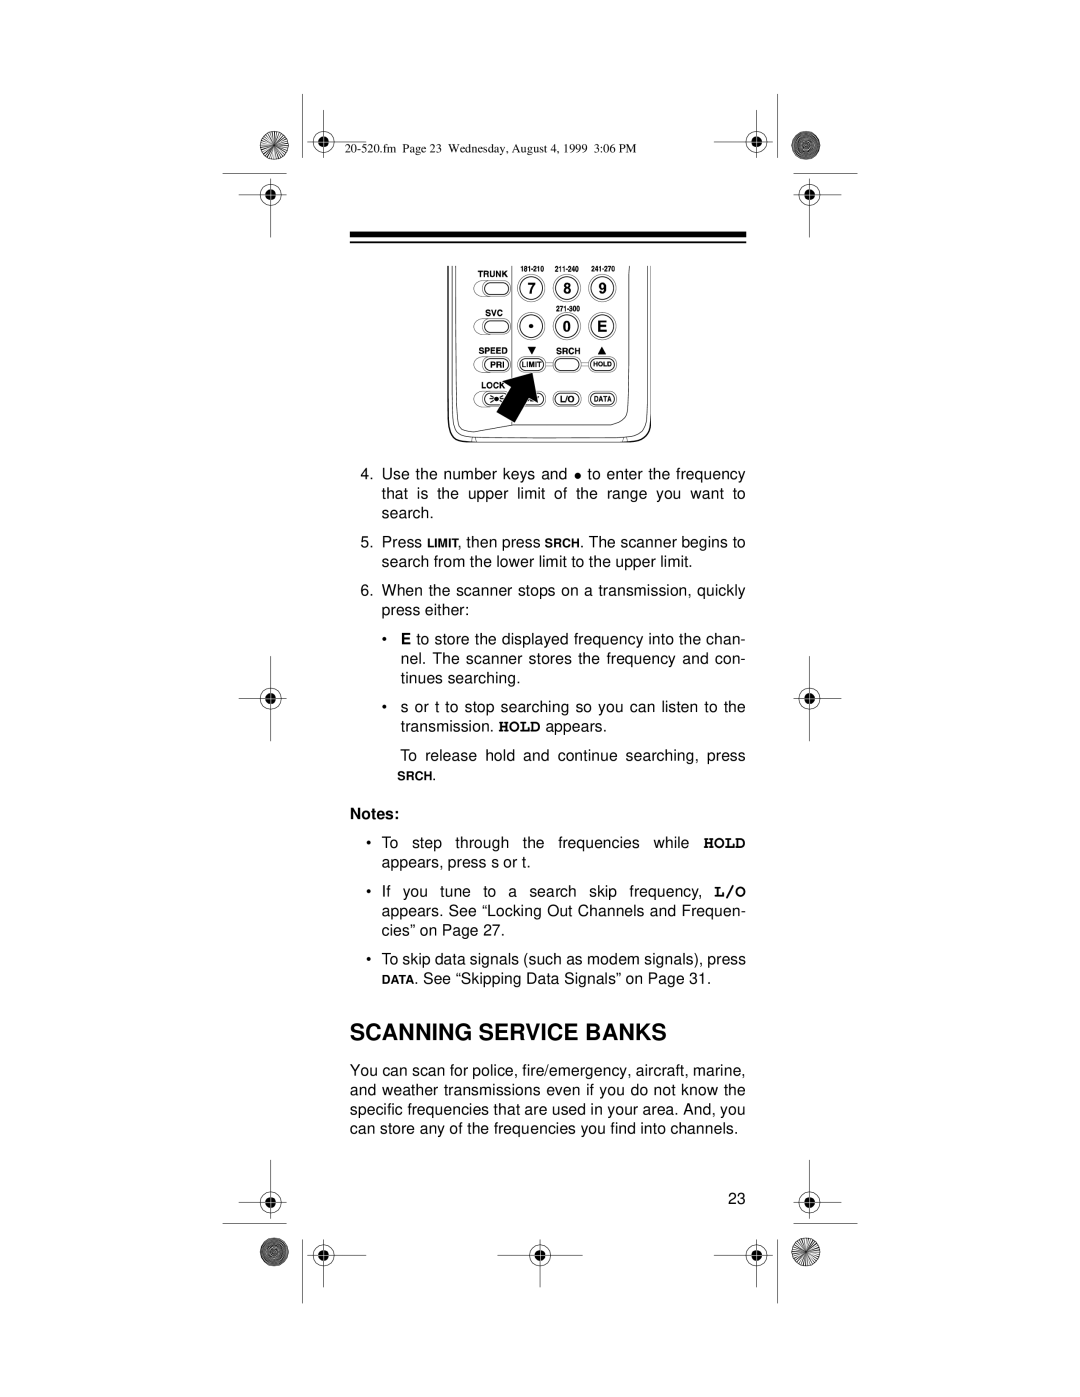 Radio Shack PRO-90 owner manual Scanning Service Banks 